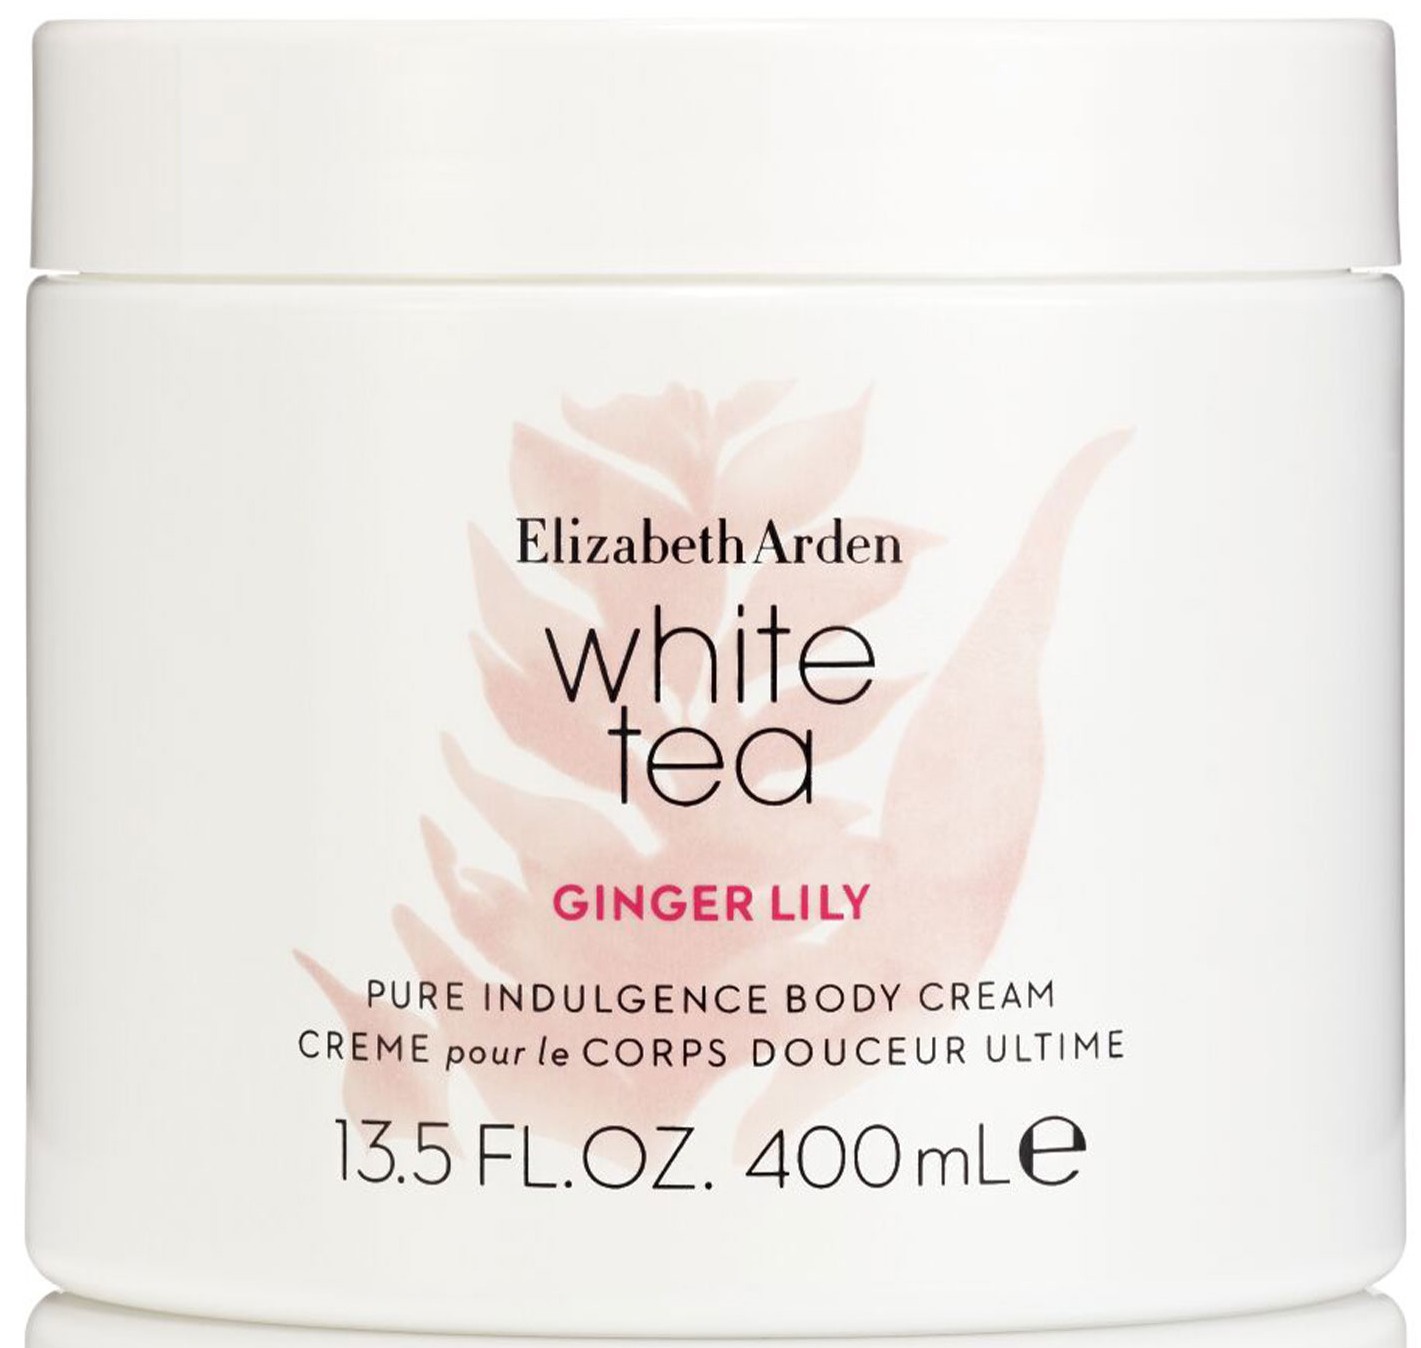 Elizabeth Arden White Tea Ginger Lily Pure Indulgence Body Cream